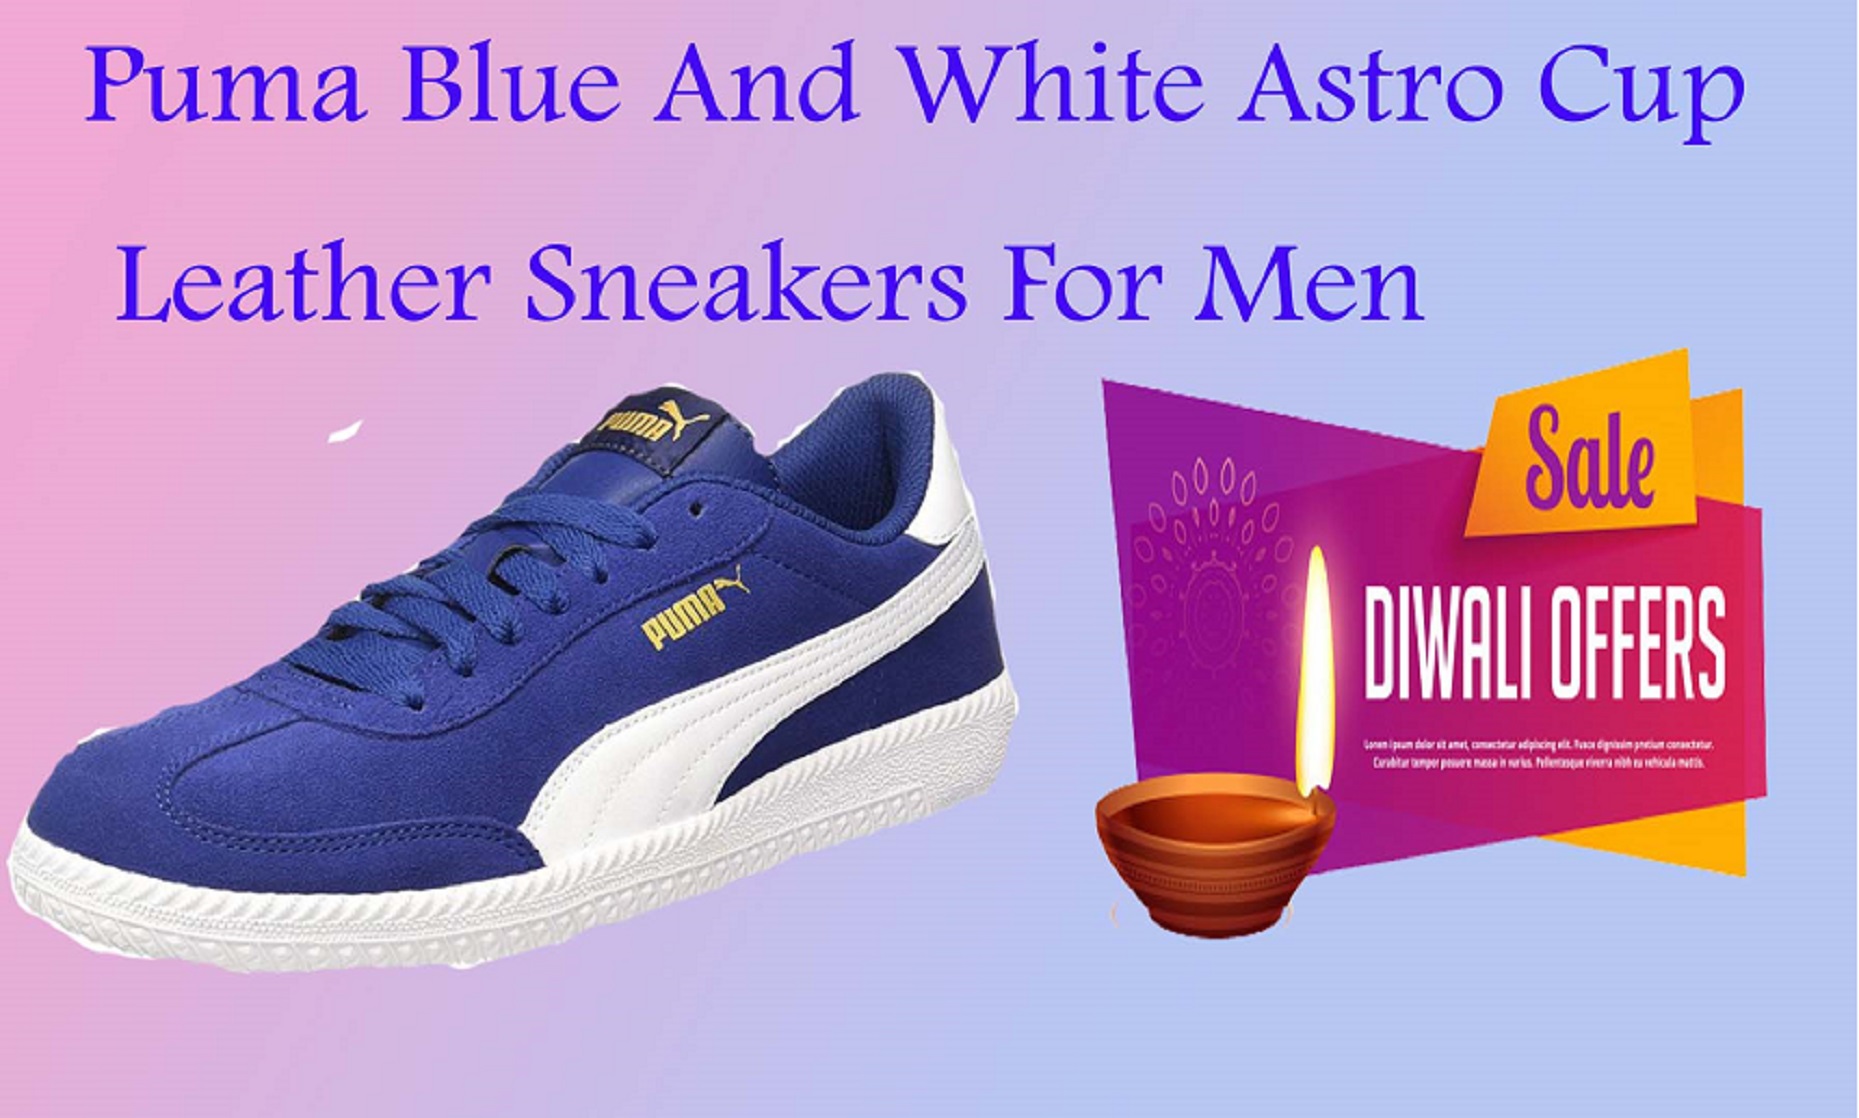 puma shoes diwali offer